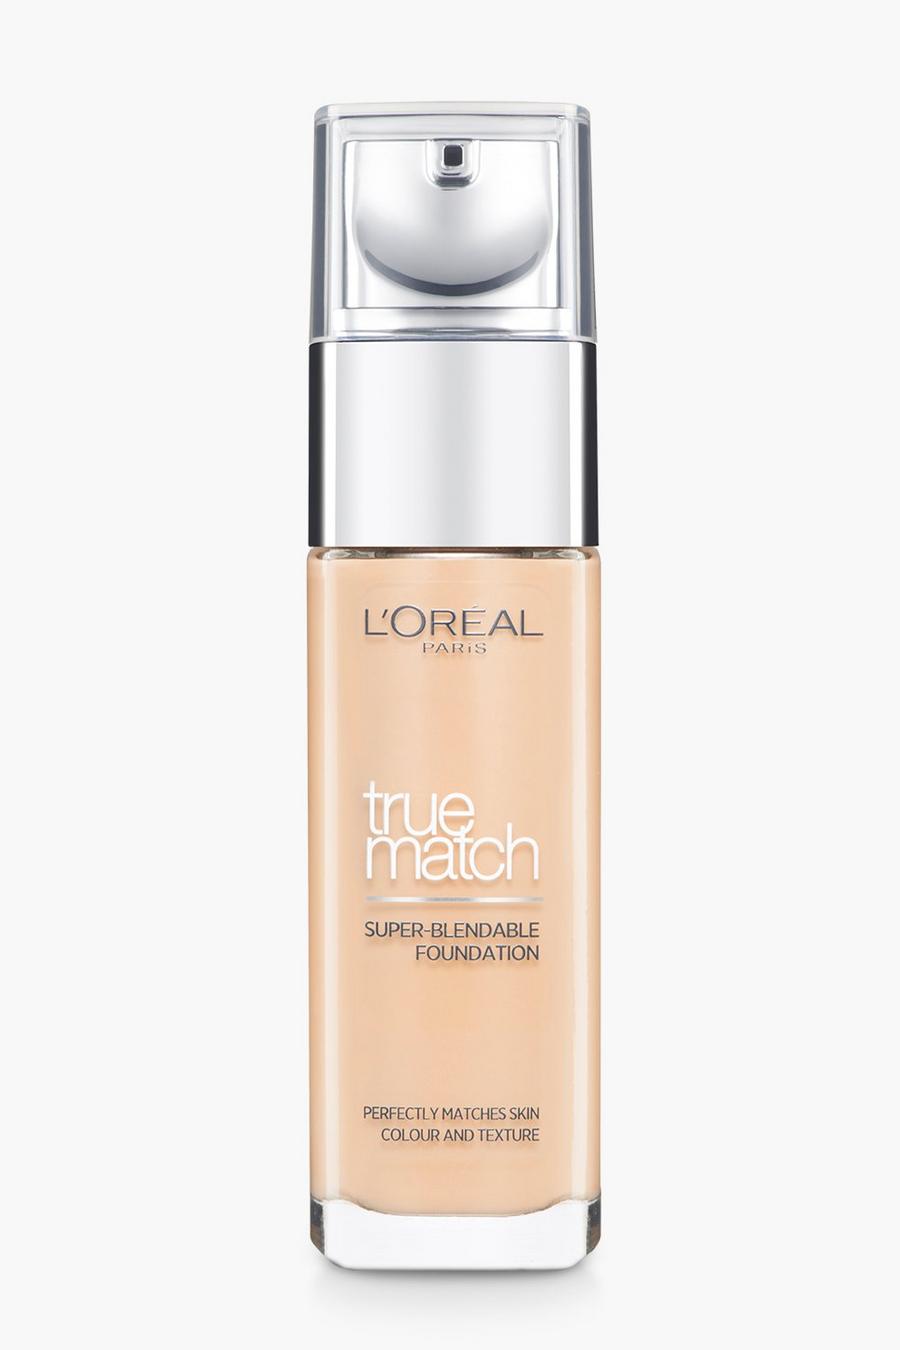 L'Oréal Paris True Match Liquid Foundation 3W Golden Beige, SPF 17, 30ml